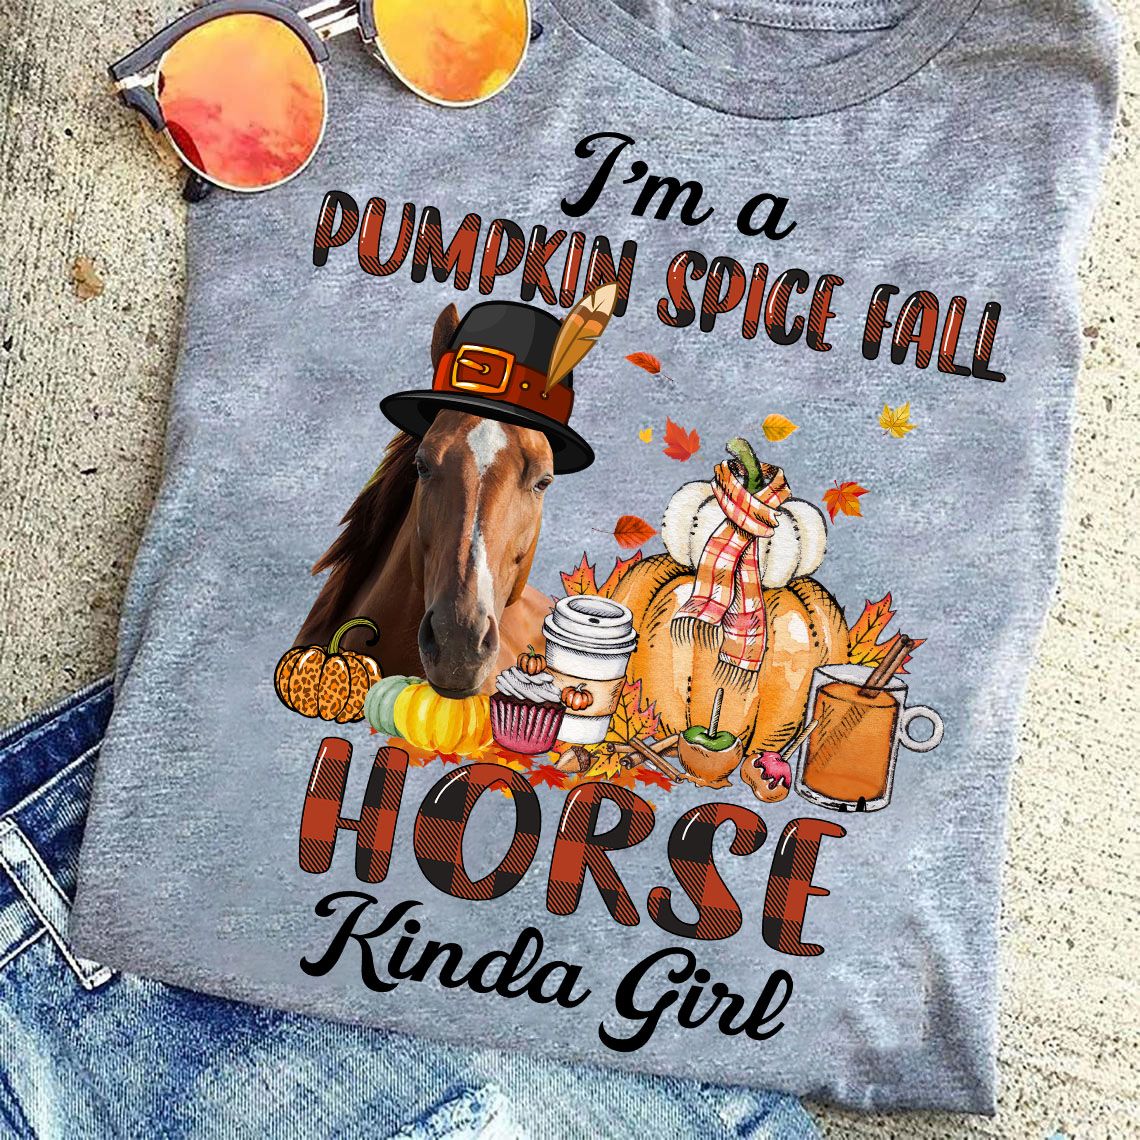 Horse And Pumpkin, Fall Season - I'm a spice fall horse kinda girl